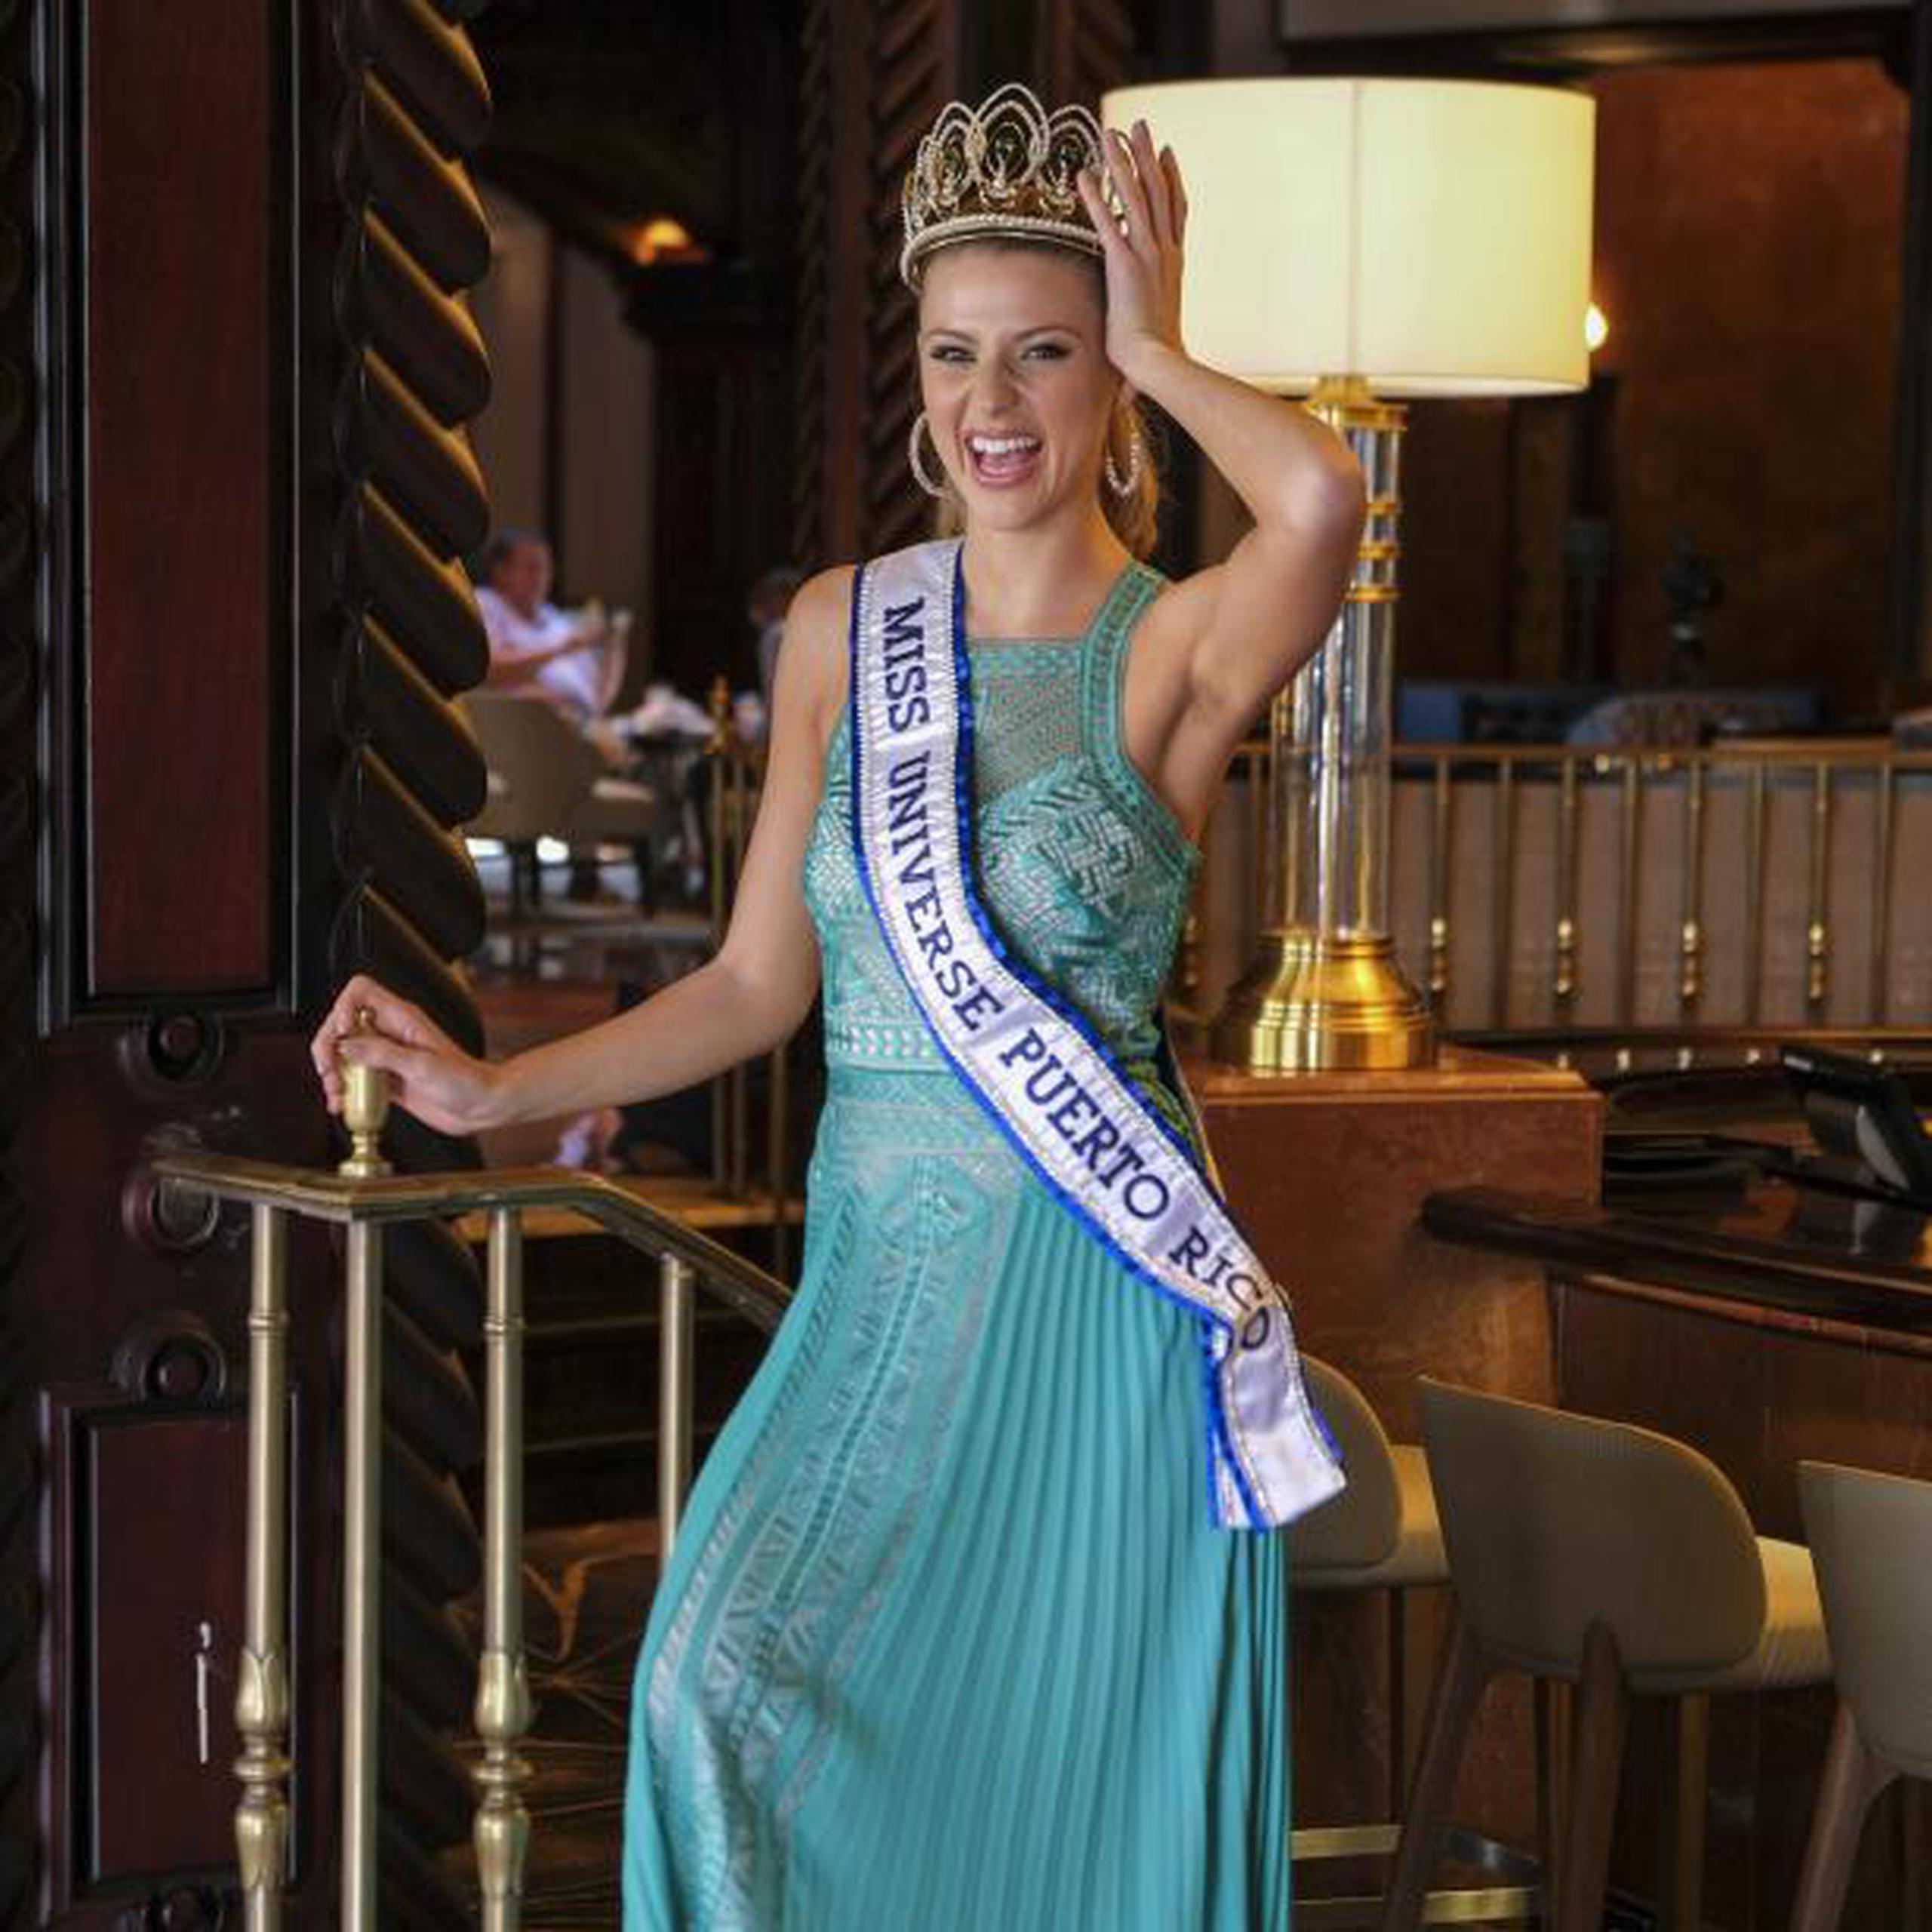 Madison Anderson representó a Toa Baja en el certamen Miss Universe Puerto Rico. (gerald.lopez@gfrmedia.com)